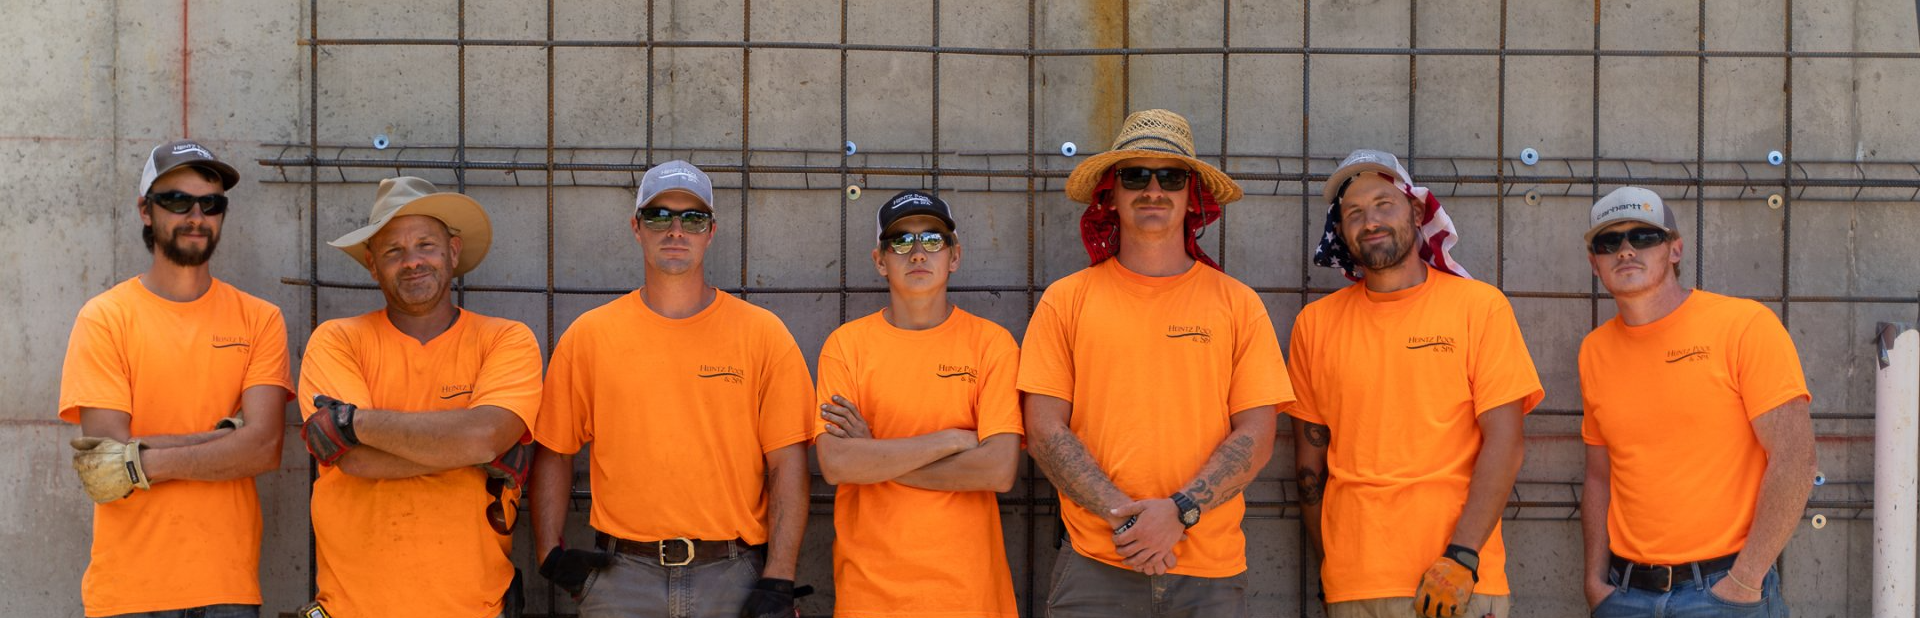 Heintz Pool & Spa Team in orange uniform